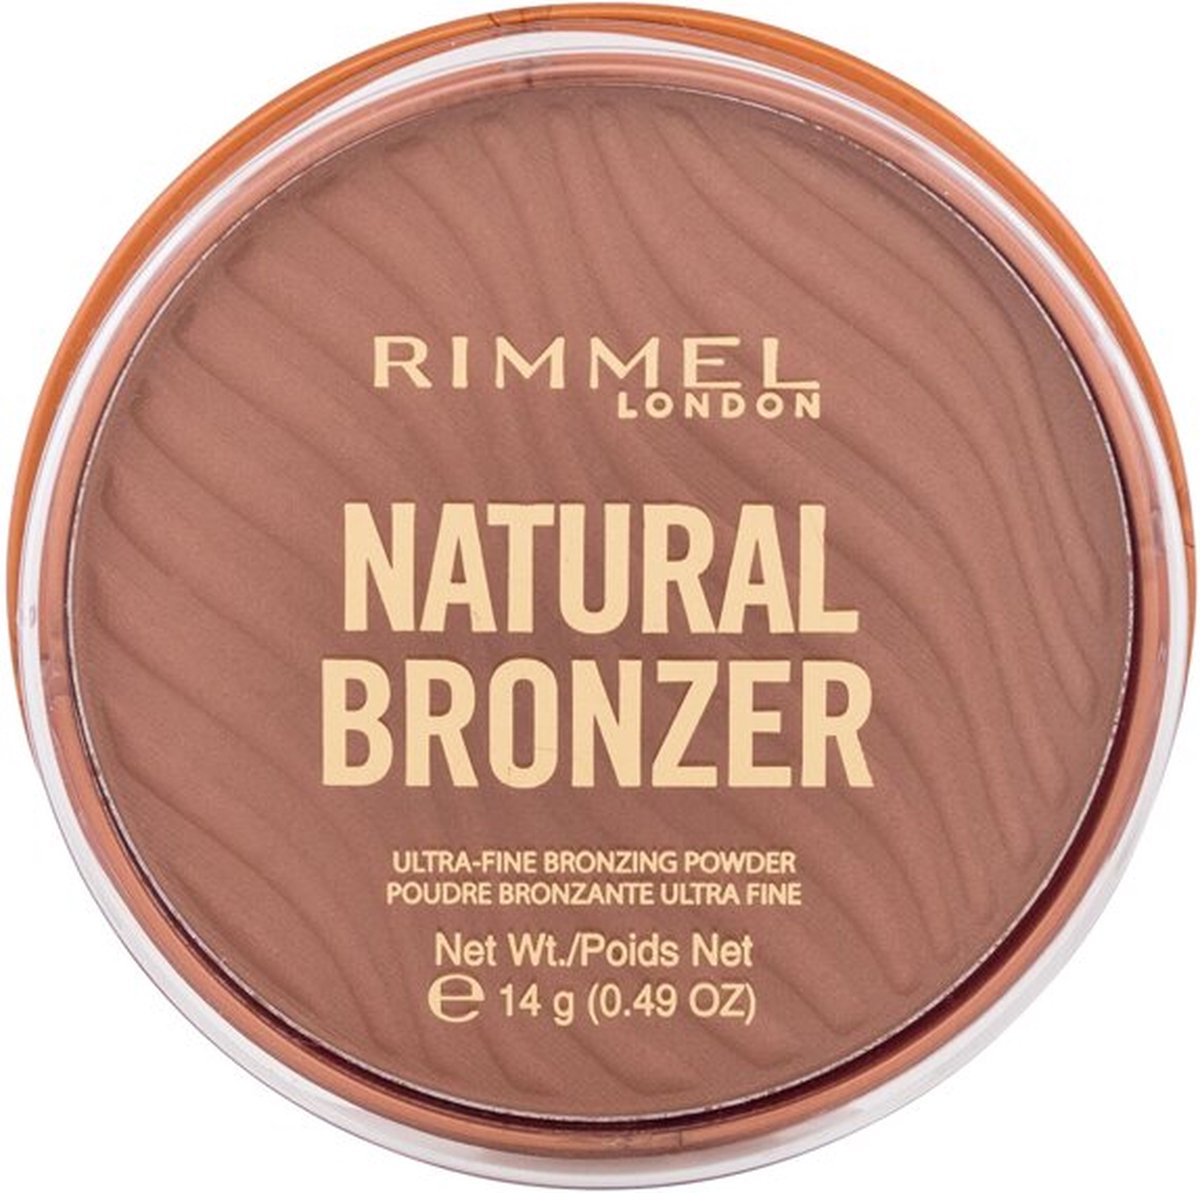 Rimmel London Natural Bronzer Ultra-Fine Bronzing Powder - 002 Sunbronze |  bol